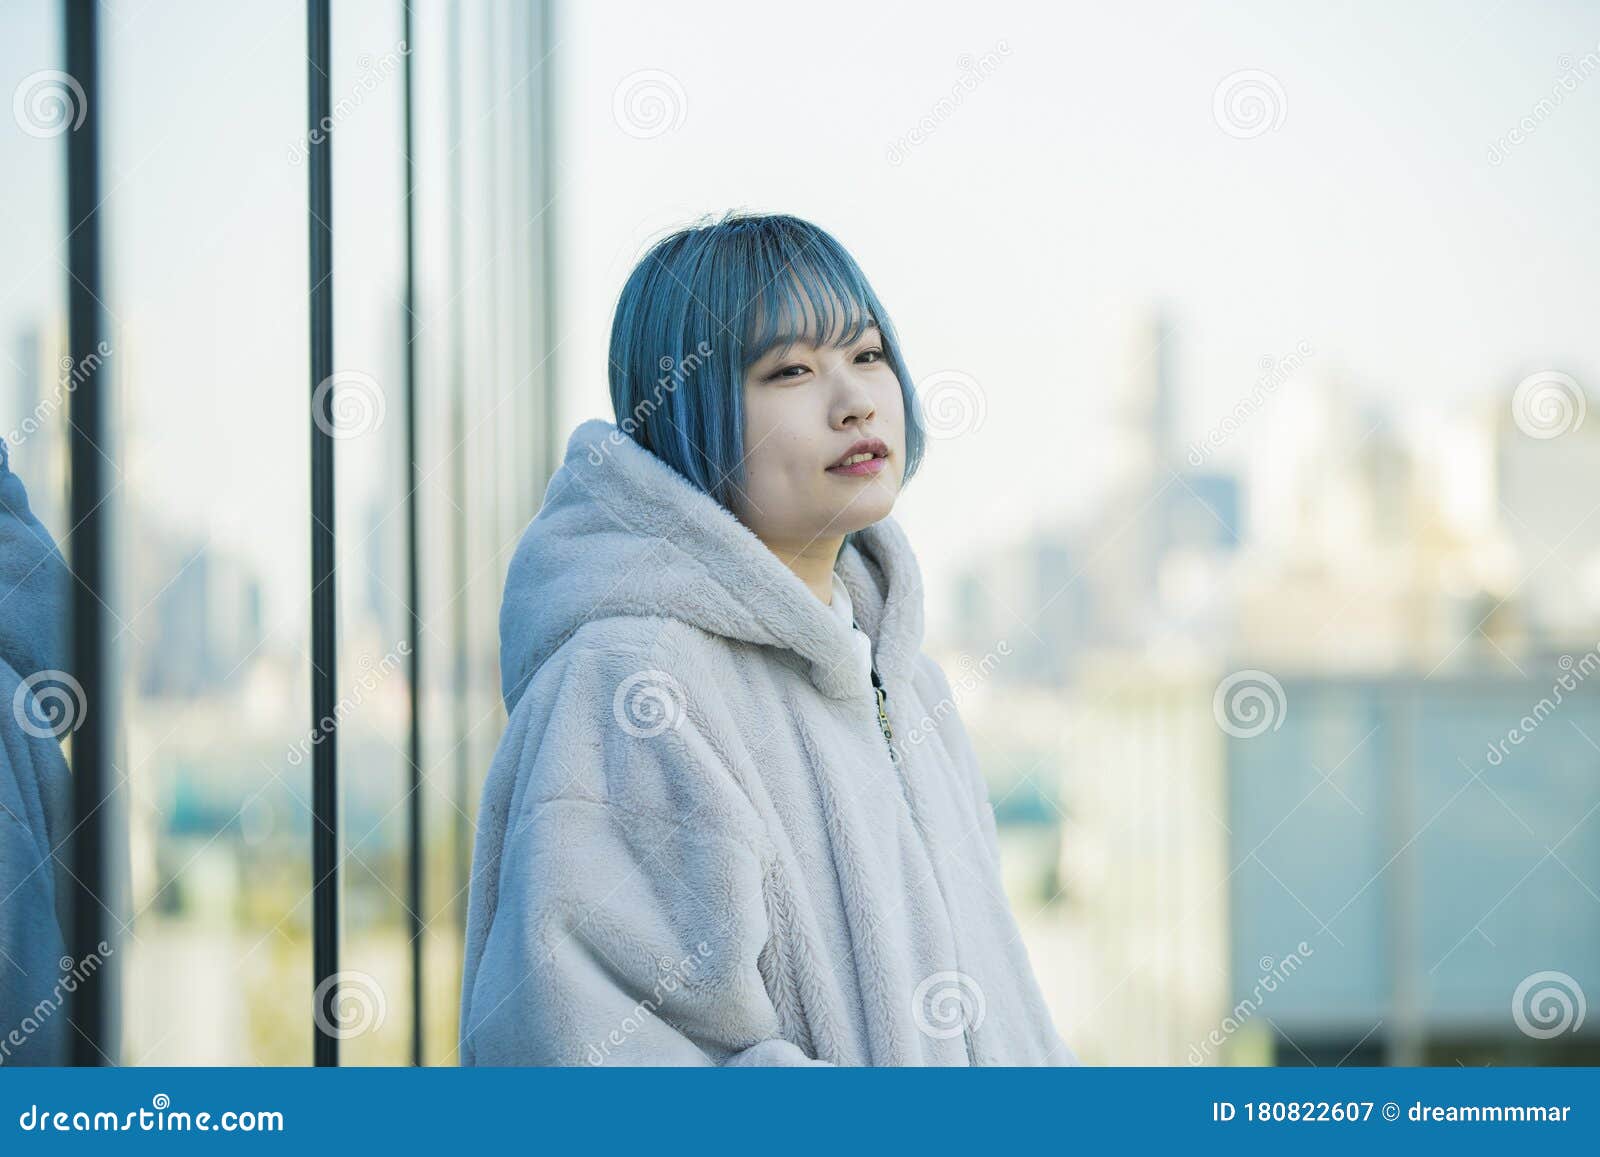 Blue hair Asian girl - wide 8